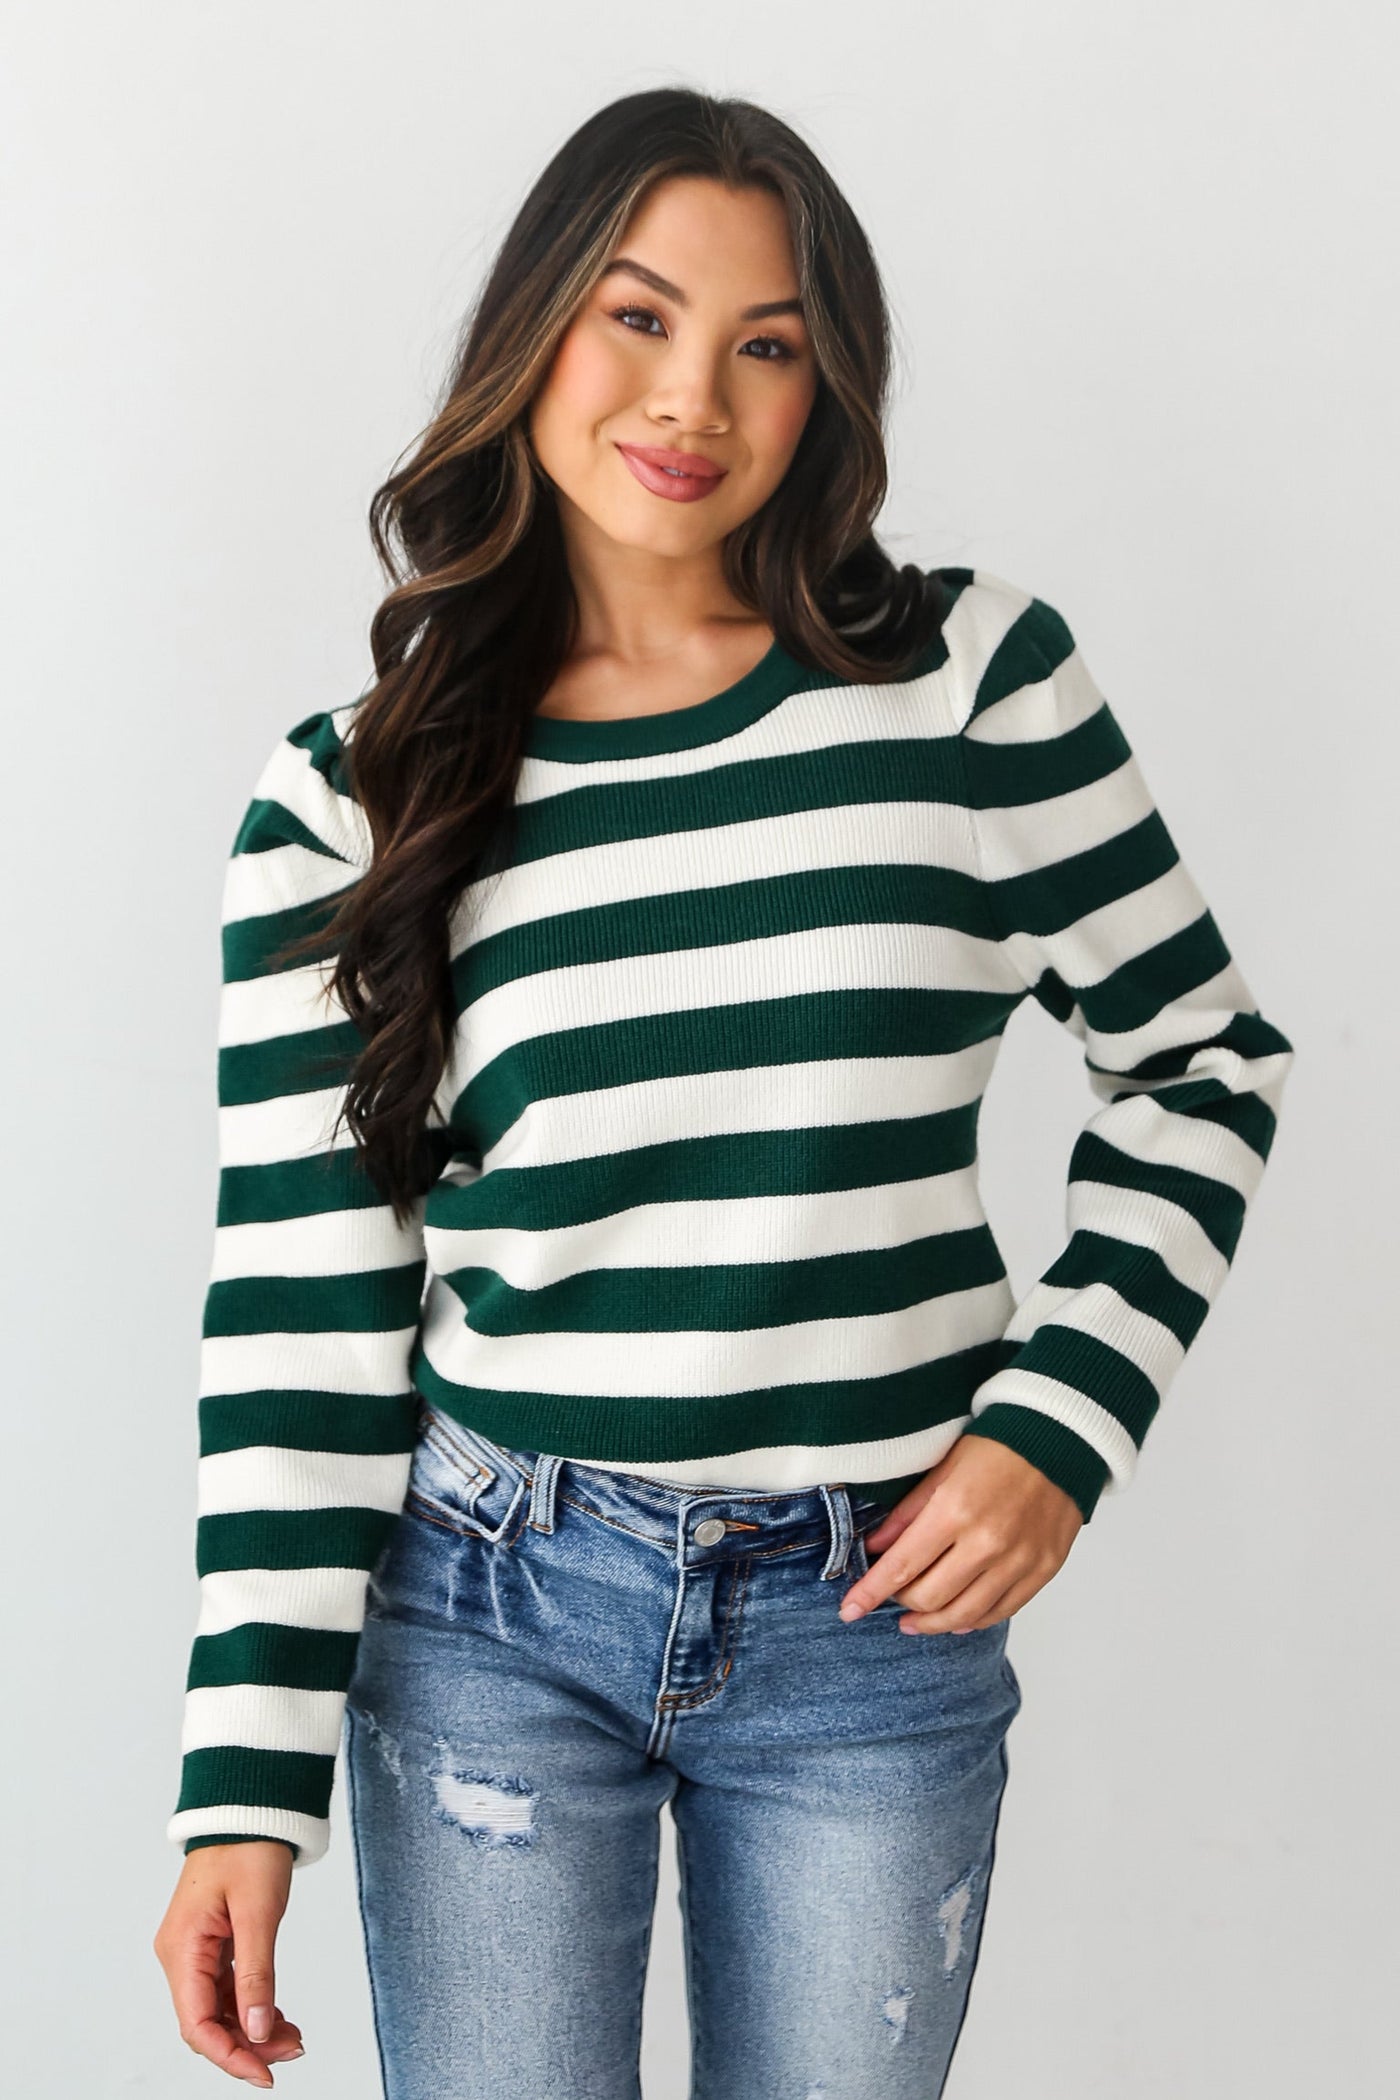 Hunter Green Striped Sweater on dress up model